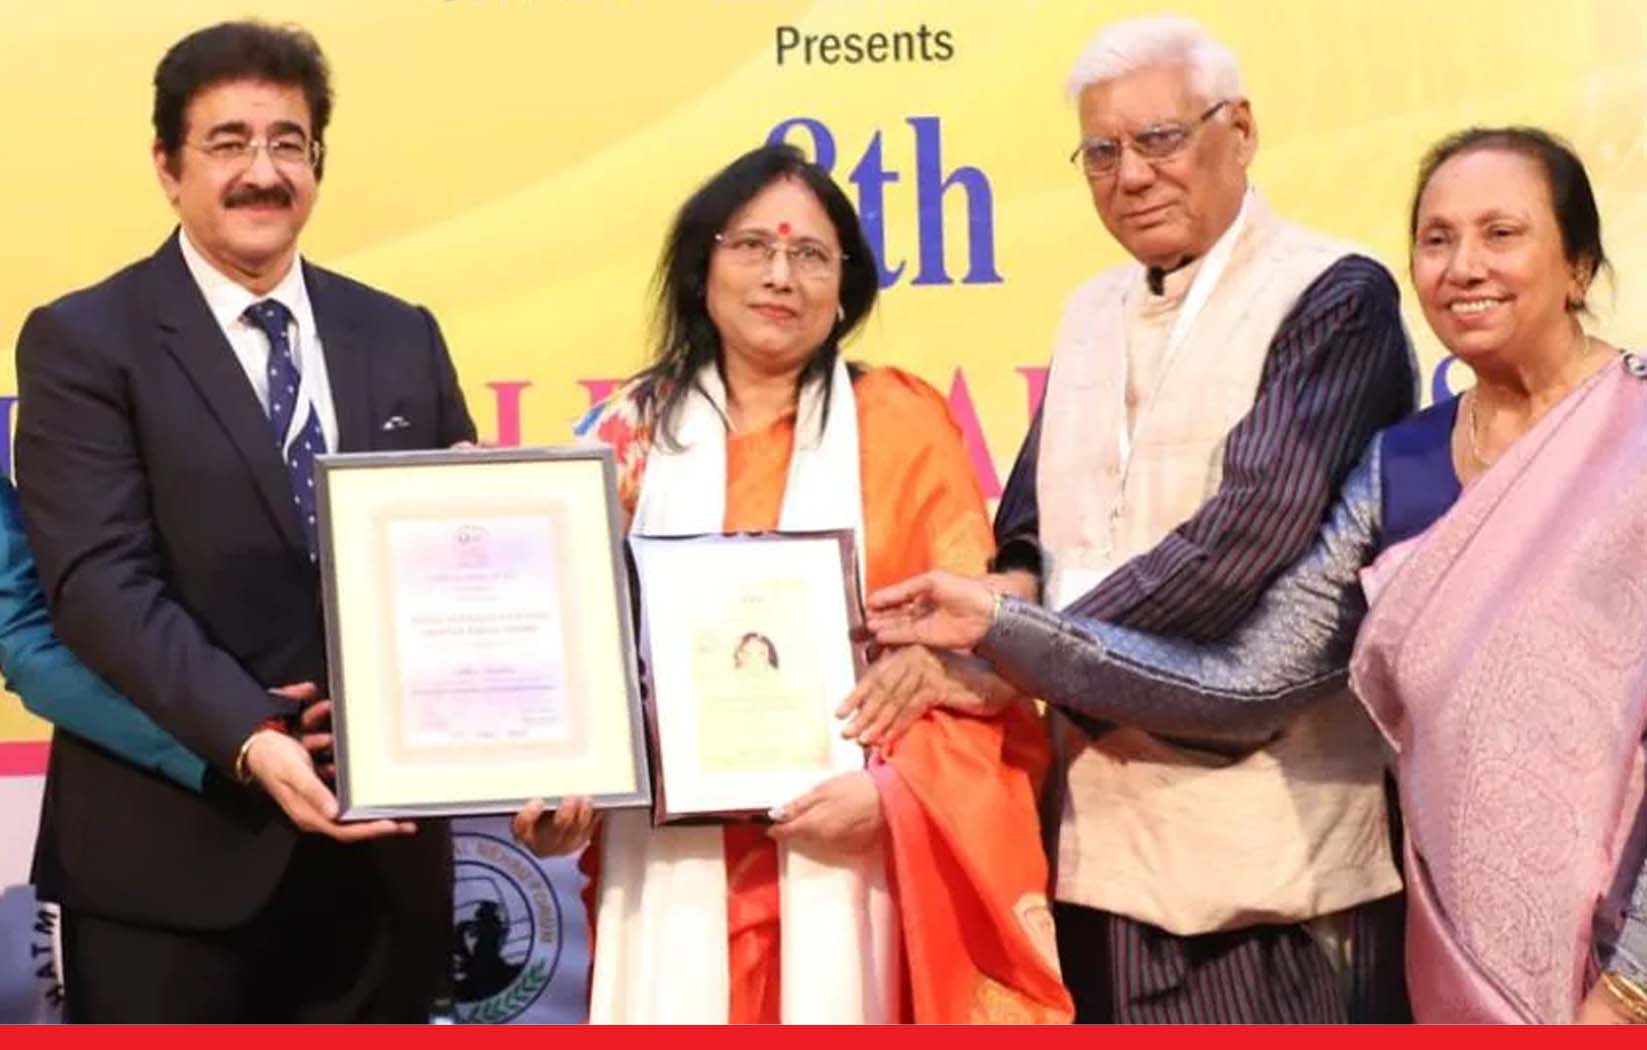 कथाकार अलका सिन्हा को सूरज प्रकाश मारवाह साहित्य रत्न पुरस्कार से सम्मानित